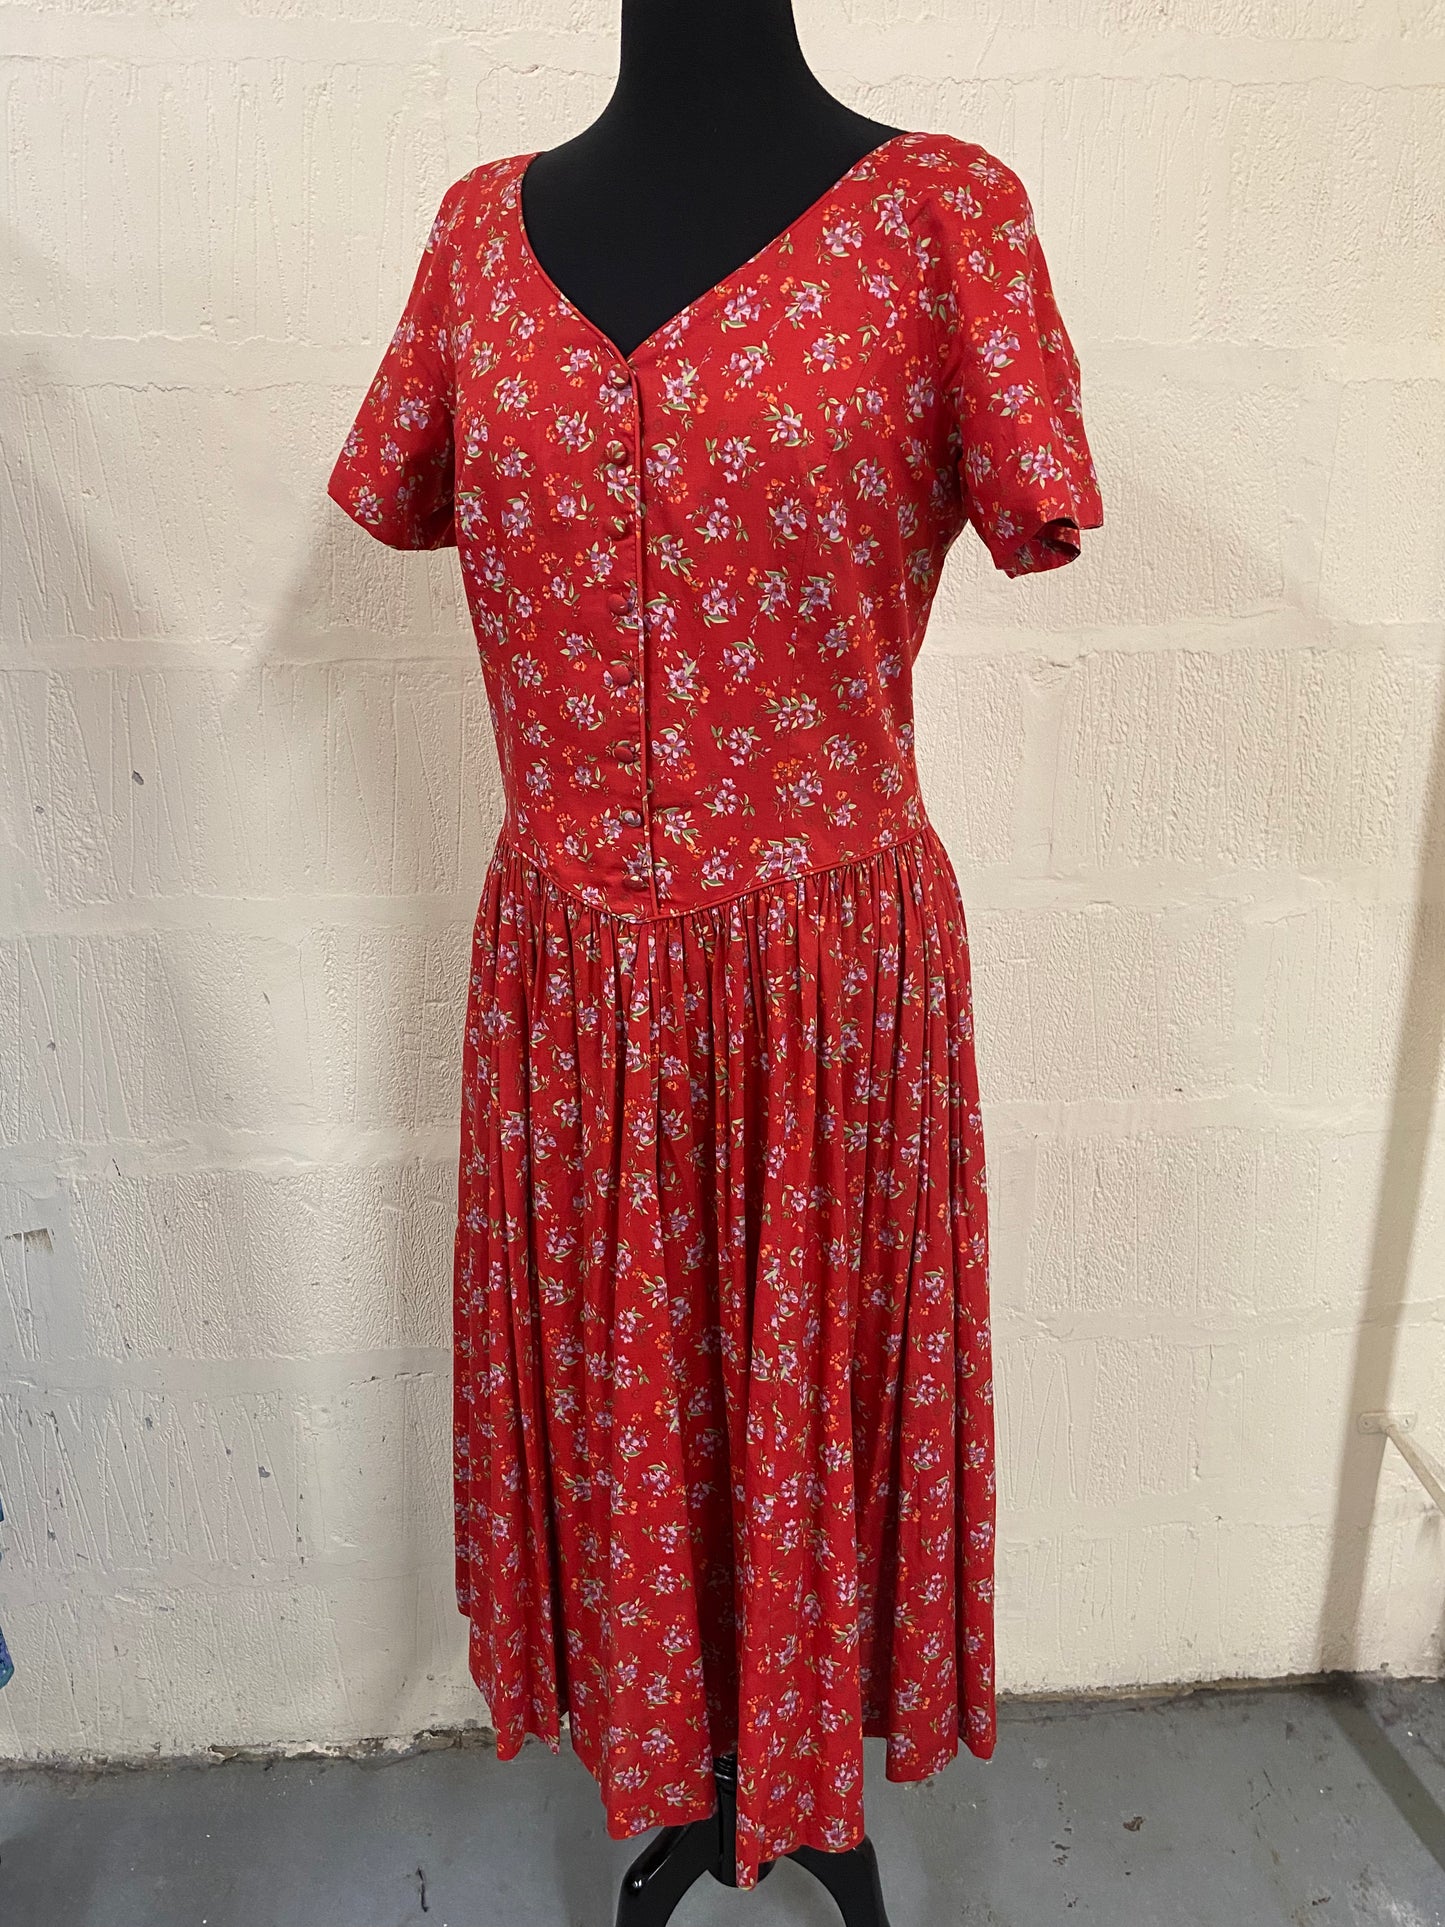 Vintage Red Floral Laura Ashley Dress Size 12